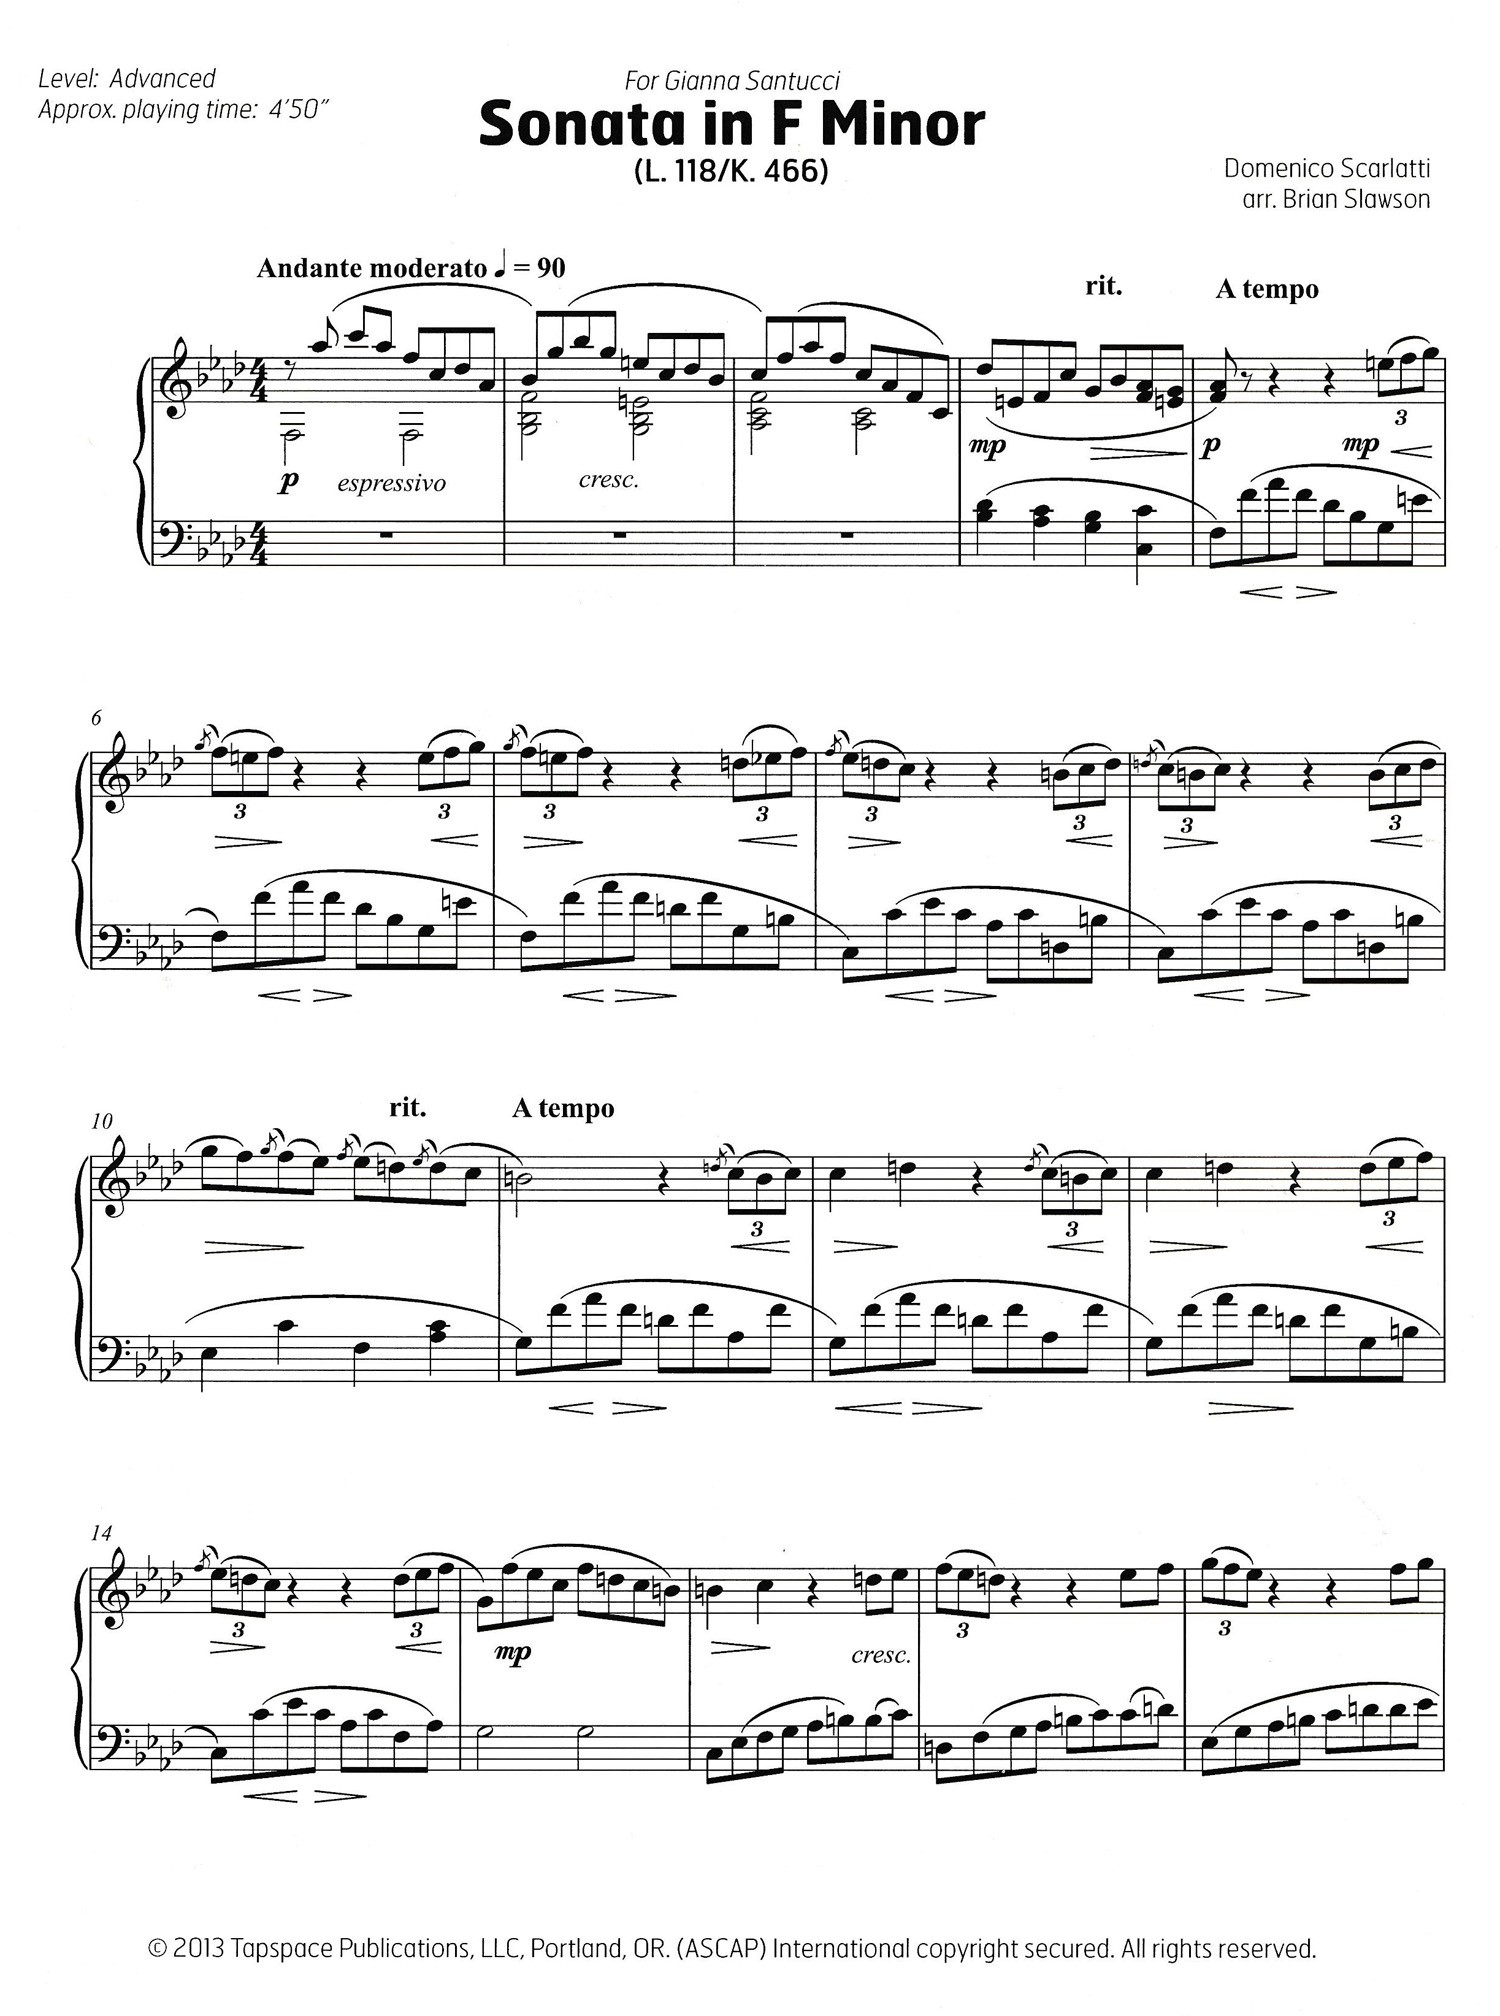 Sonata in F Minor L. 118/K. 466 by Scarlatti arr. Brian Slawson